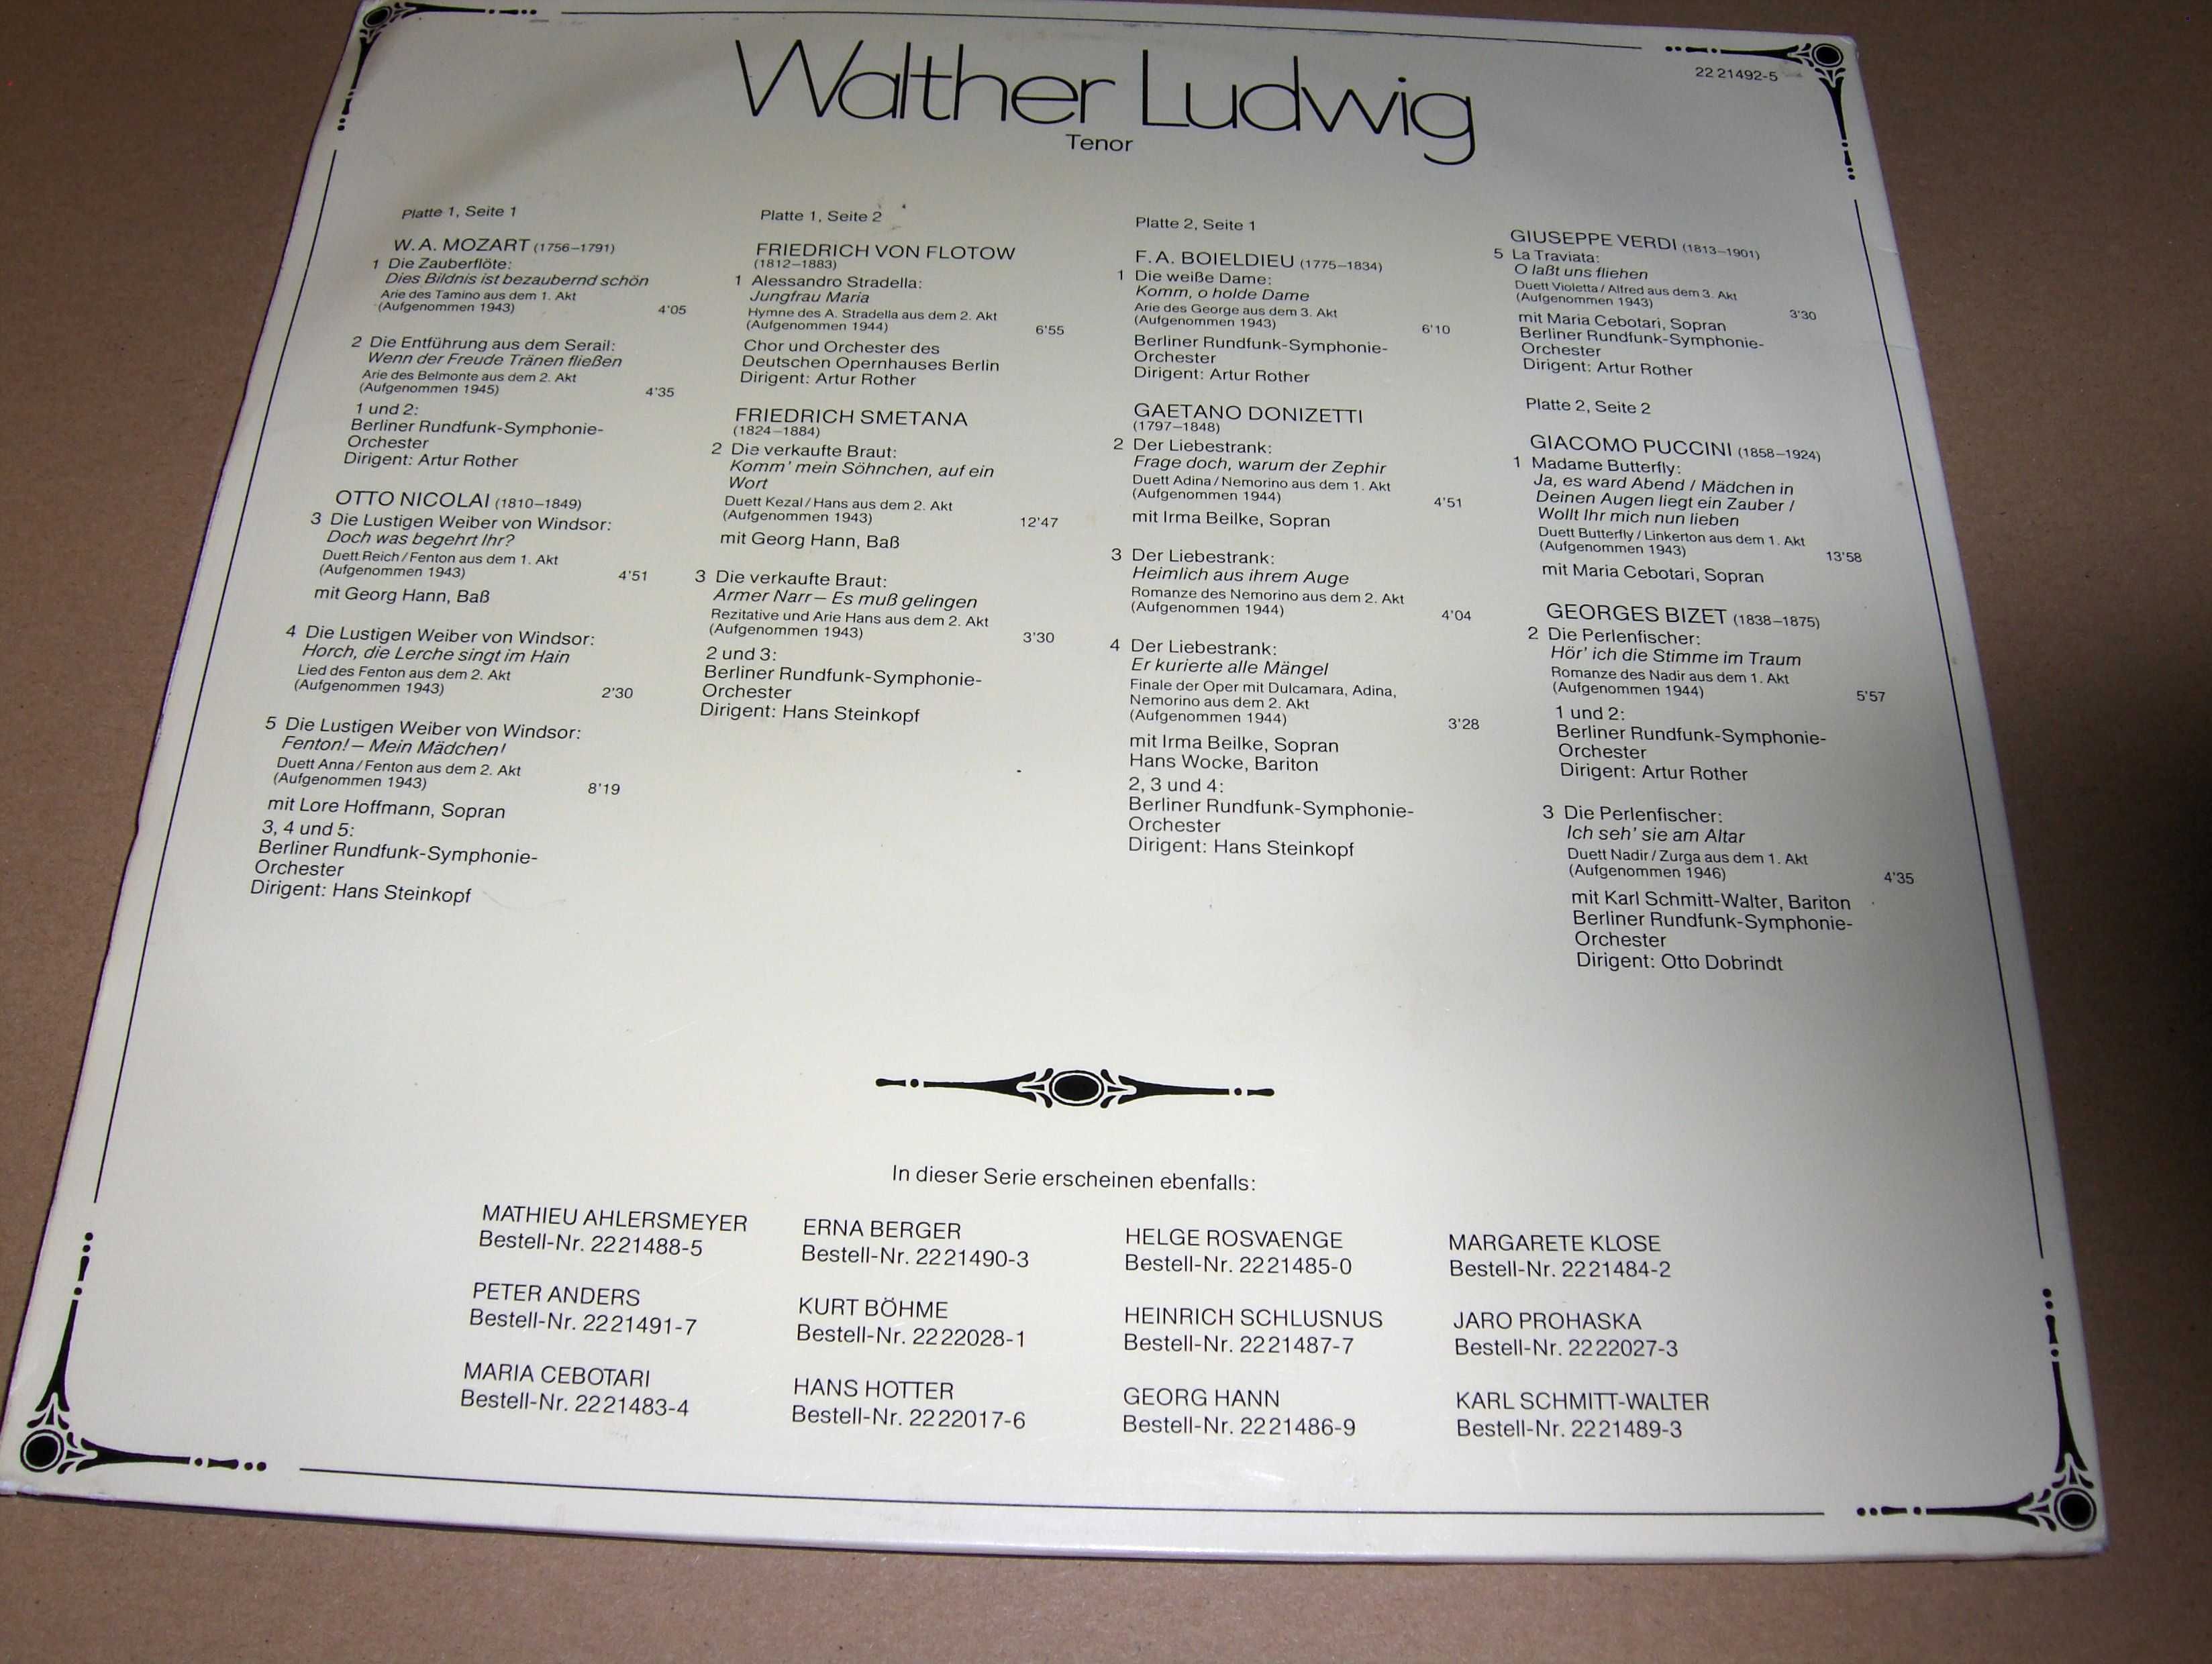 Walther Ludwig 2 LP stan NM